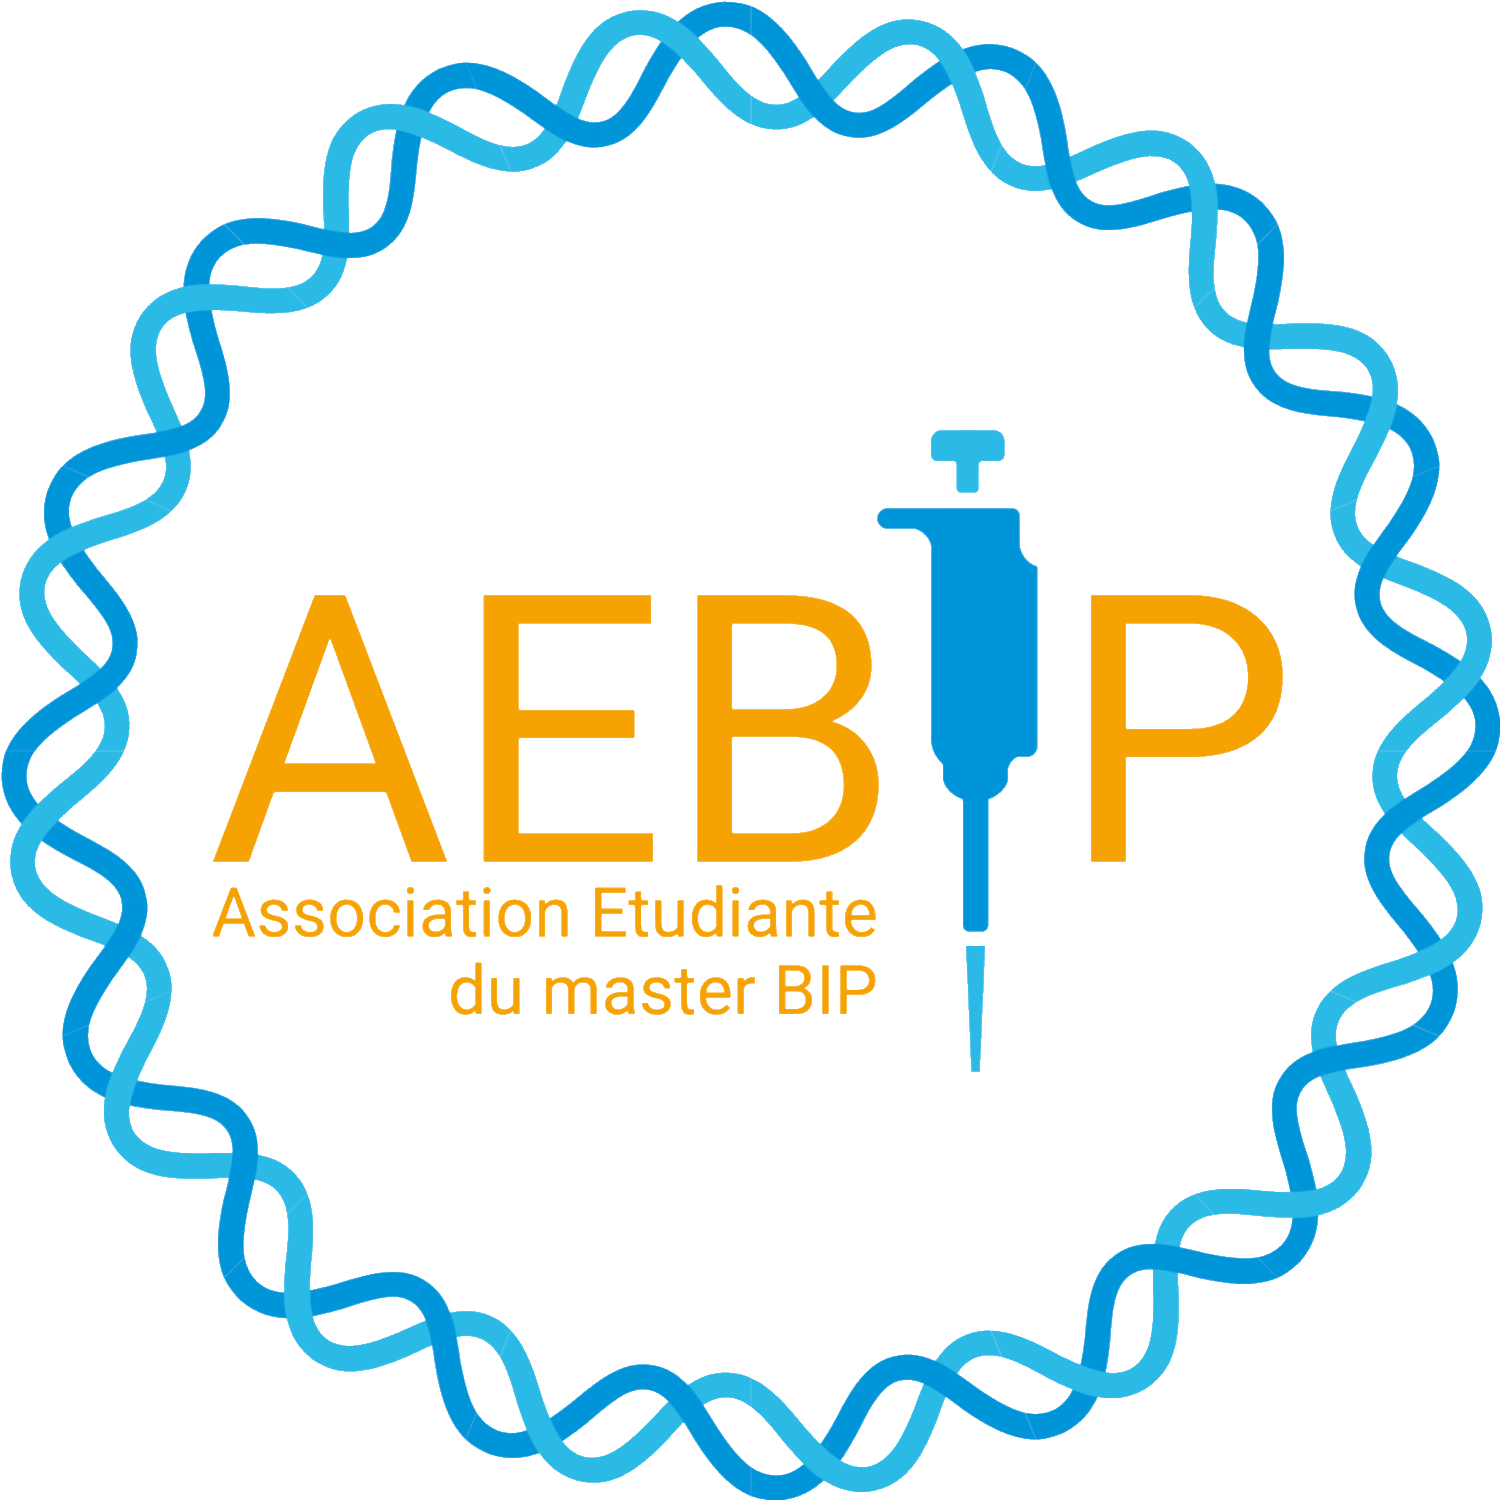 AEBIP logo